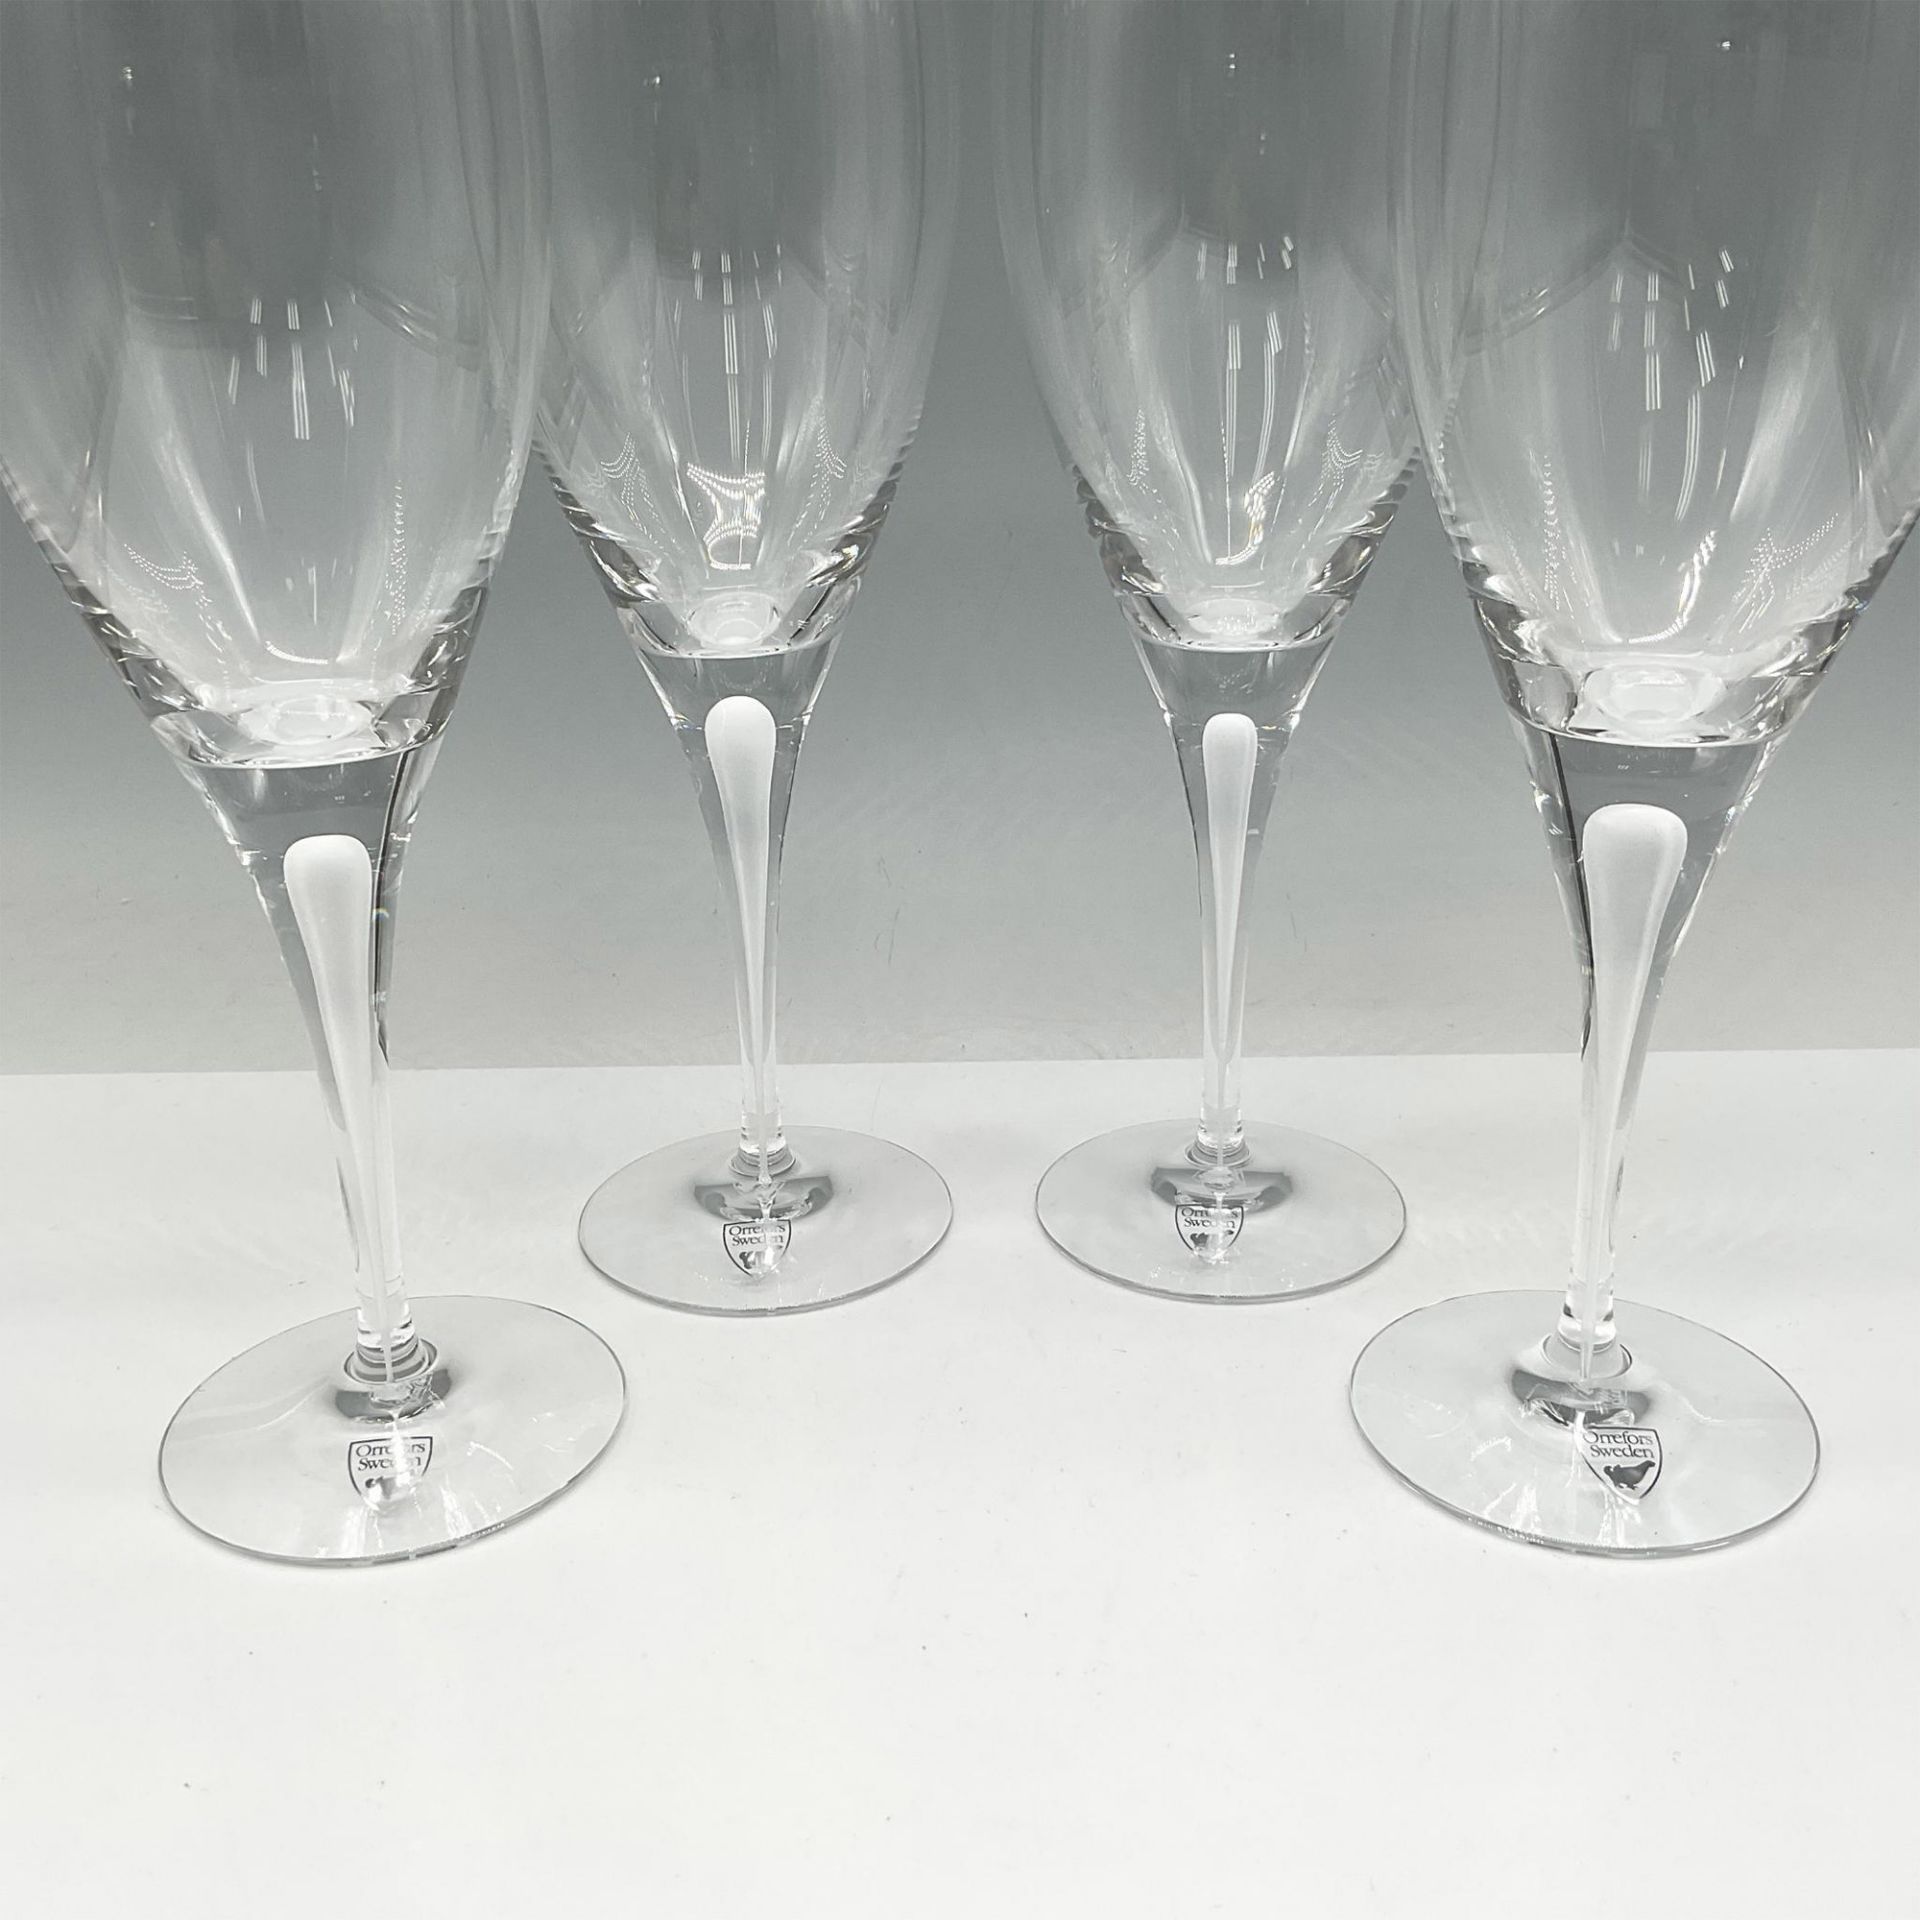 Orrefors Crystal Intermezzo Satin Wine Glasses, Set of 4 - Image 3 of 4